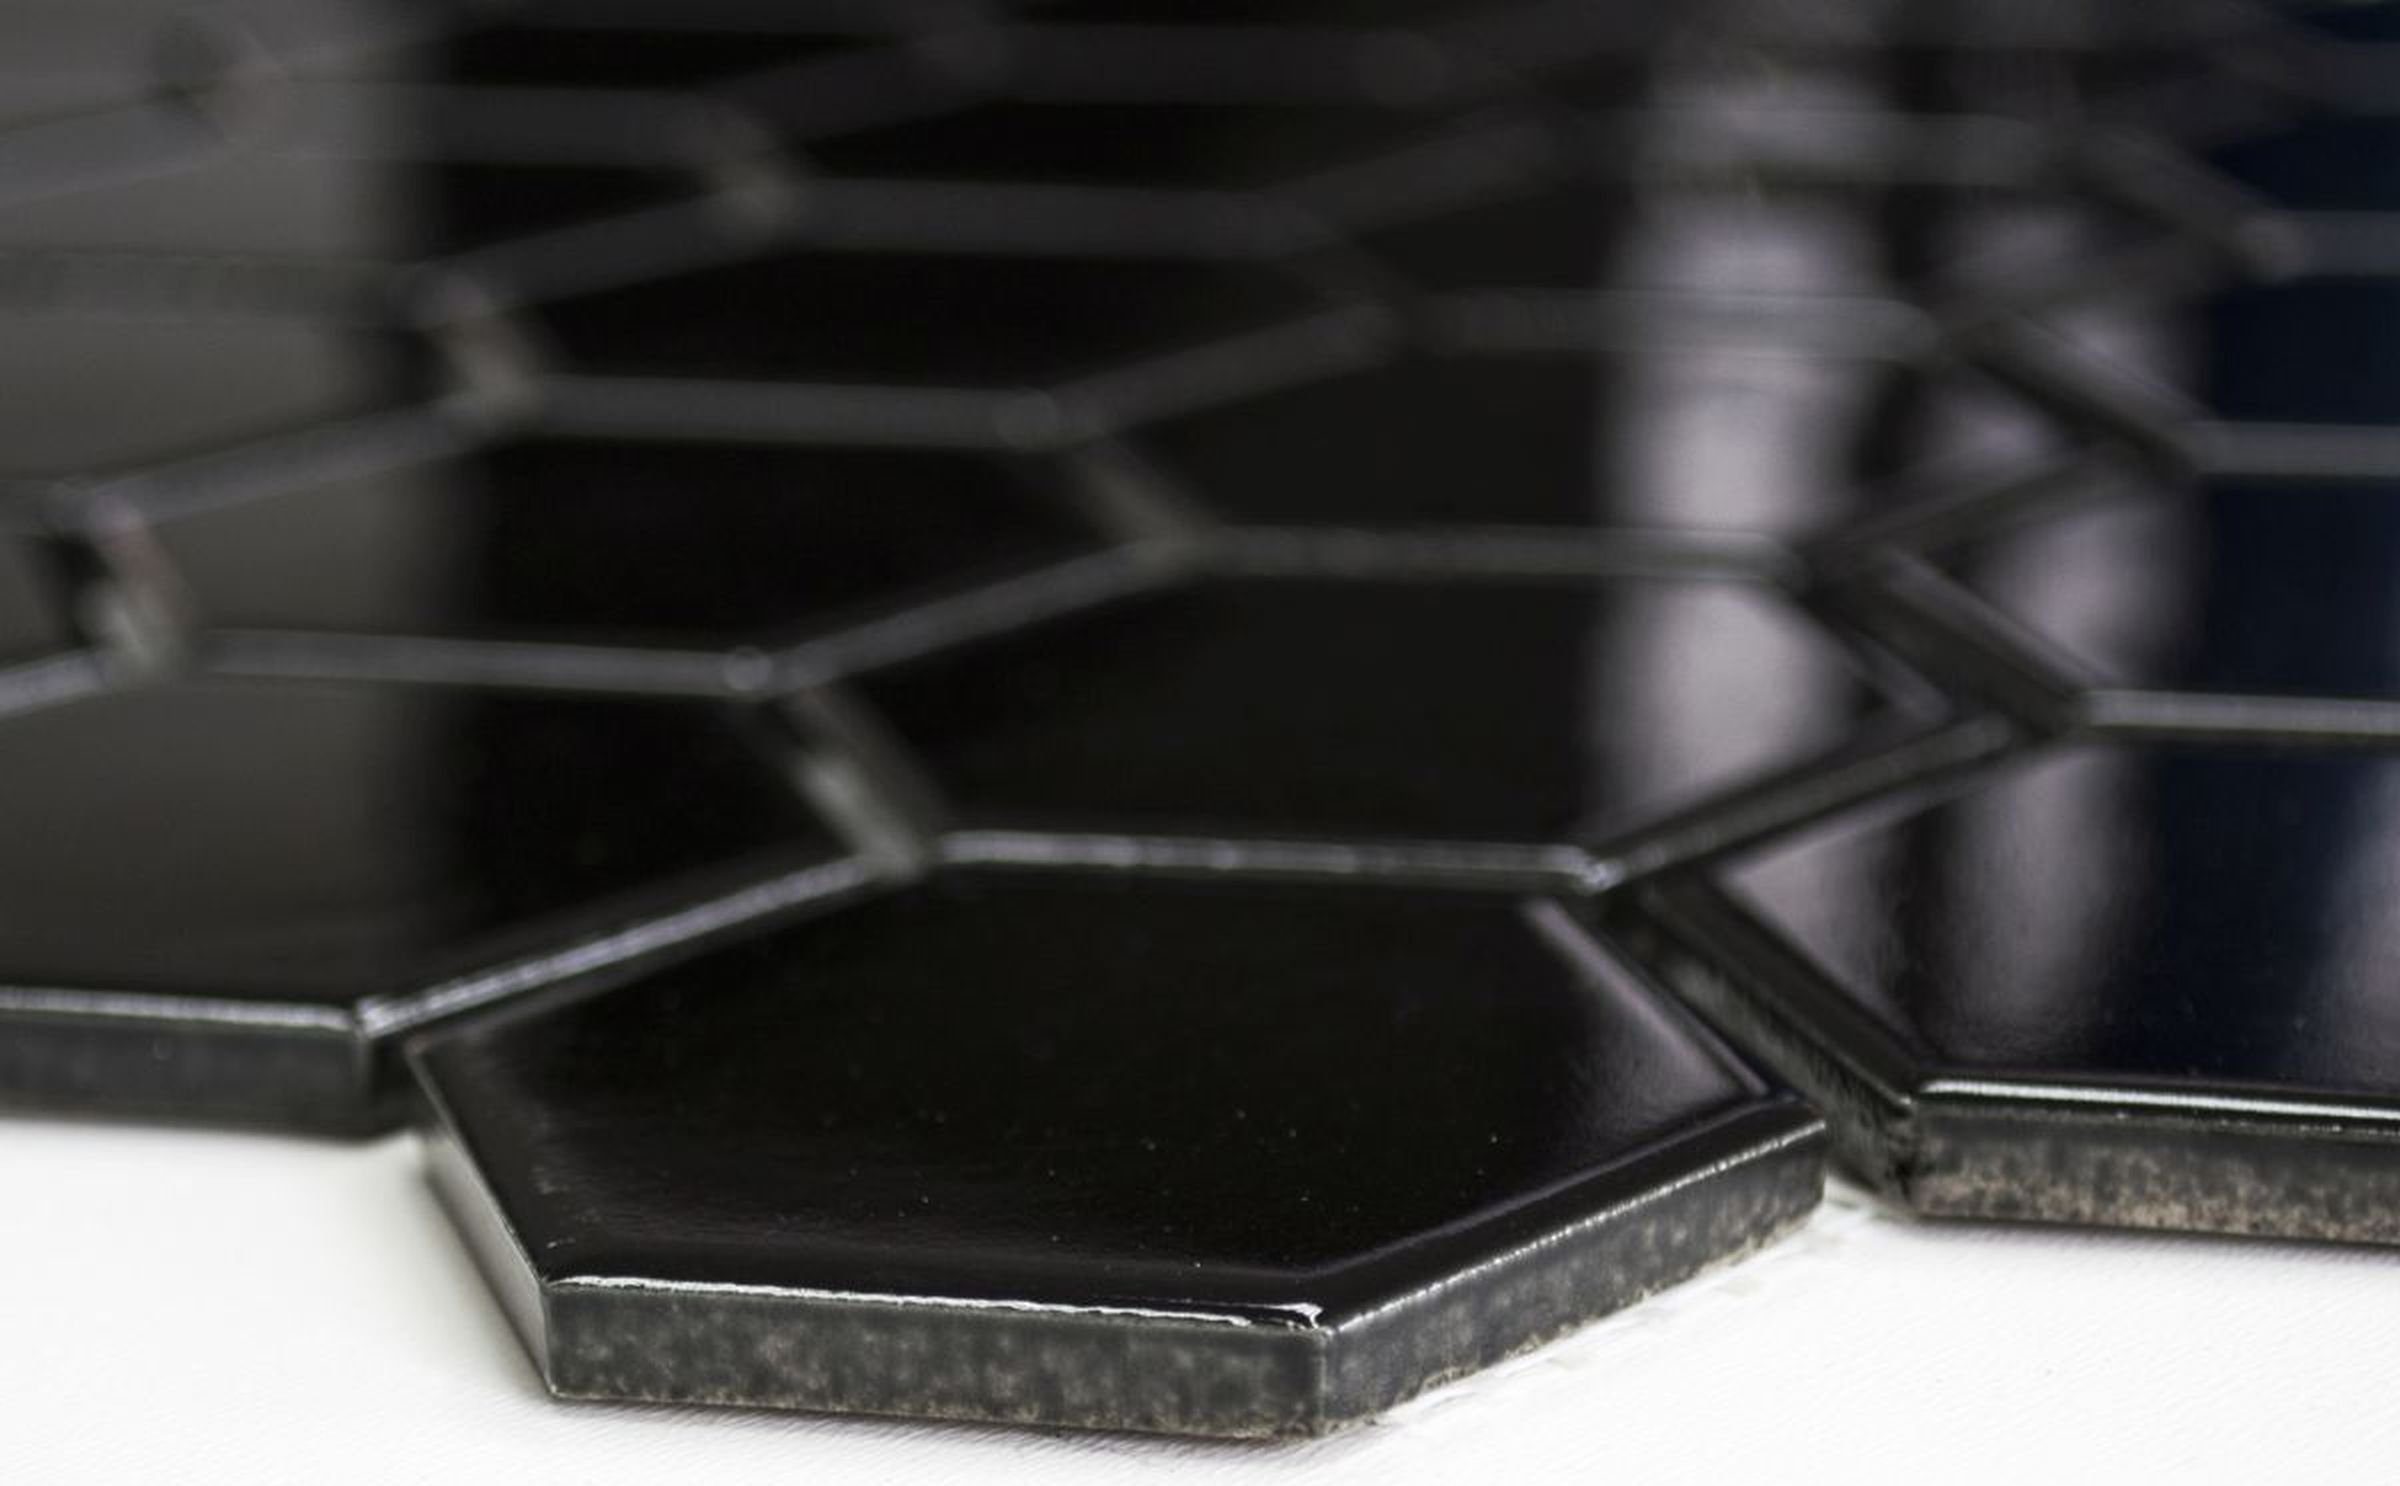 Bad Küche Mosani Keramik Fliese Mosaik Dusche glänzend schwarz Mosaikfliesen Sechseck